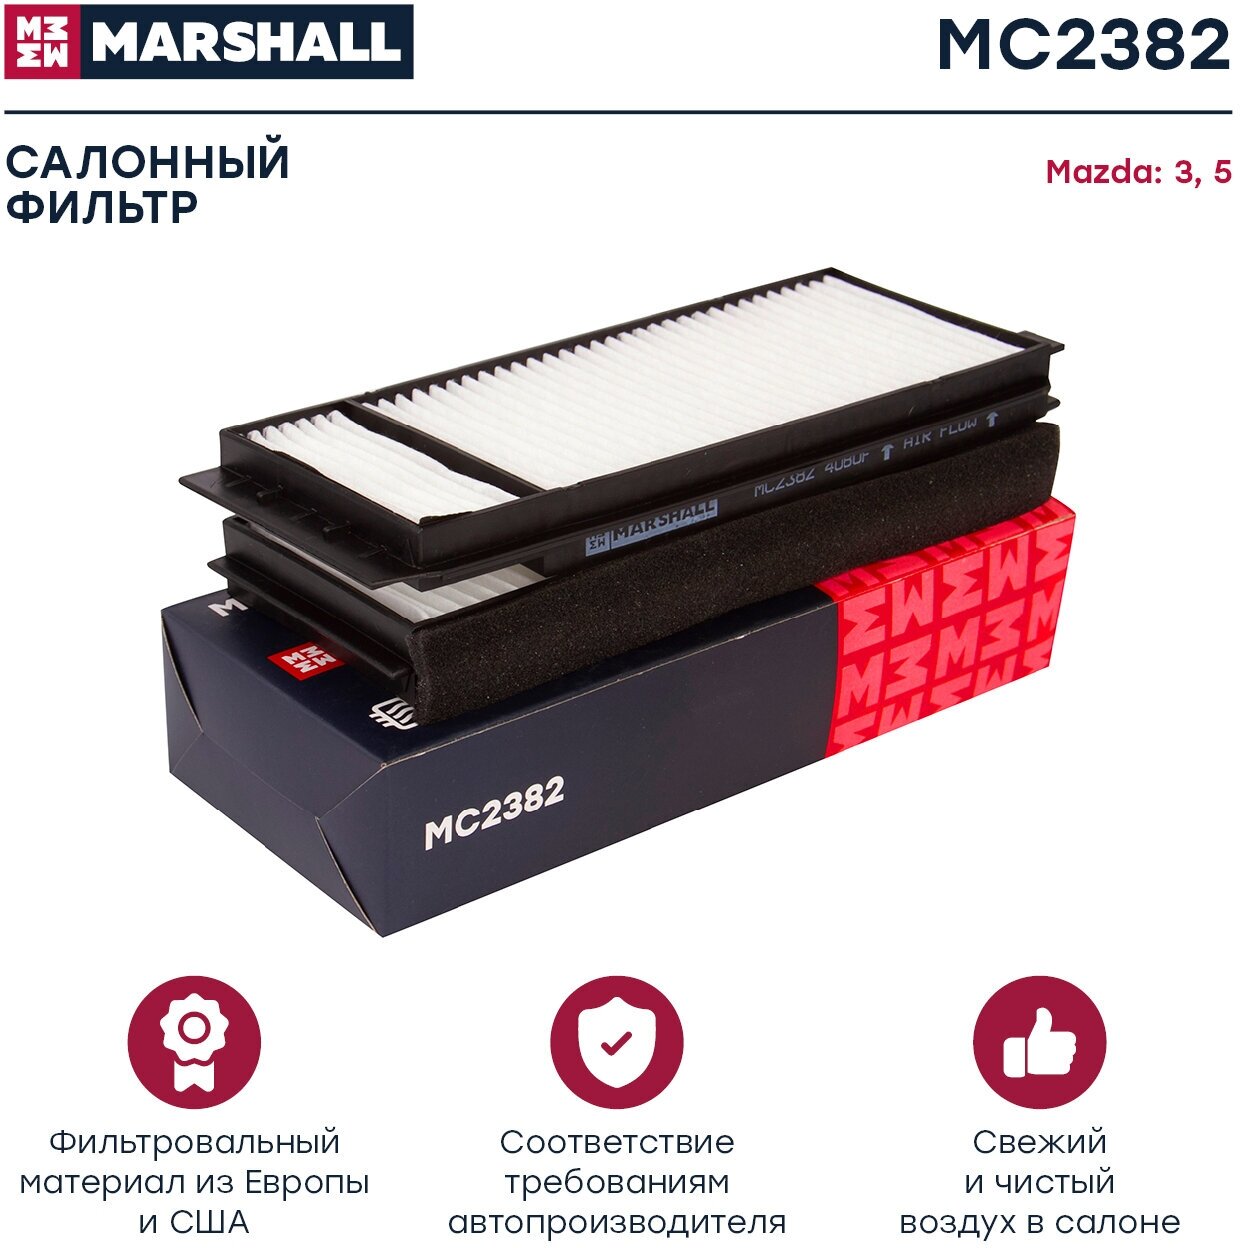 MARSHALL MC2382 Фильтр салонный